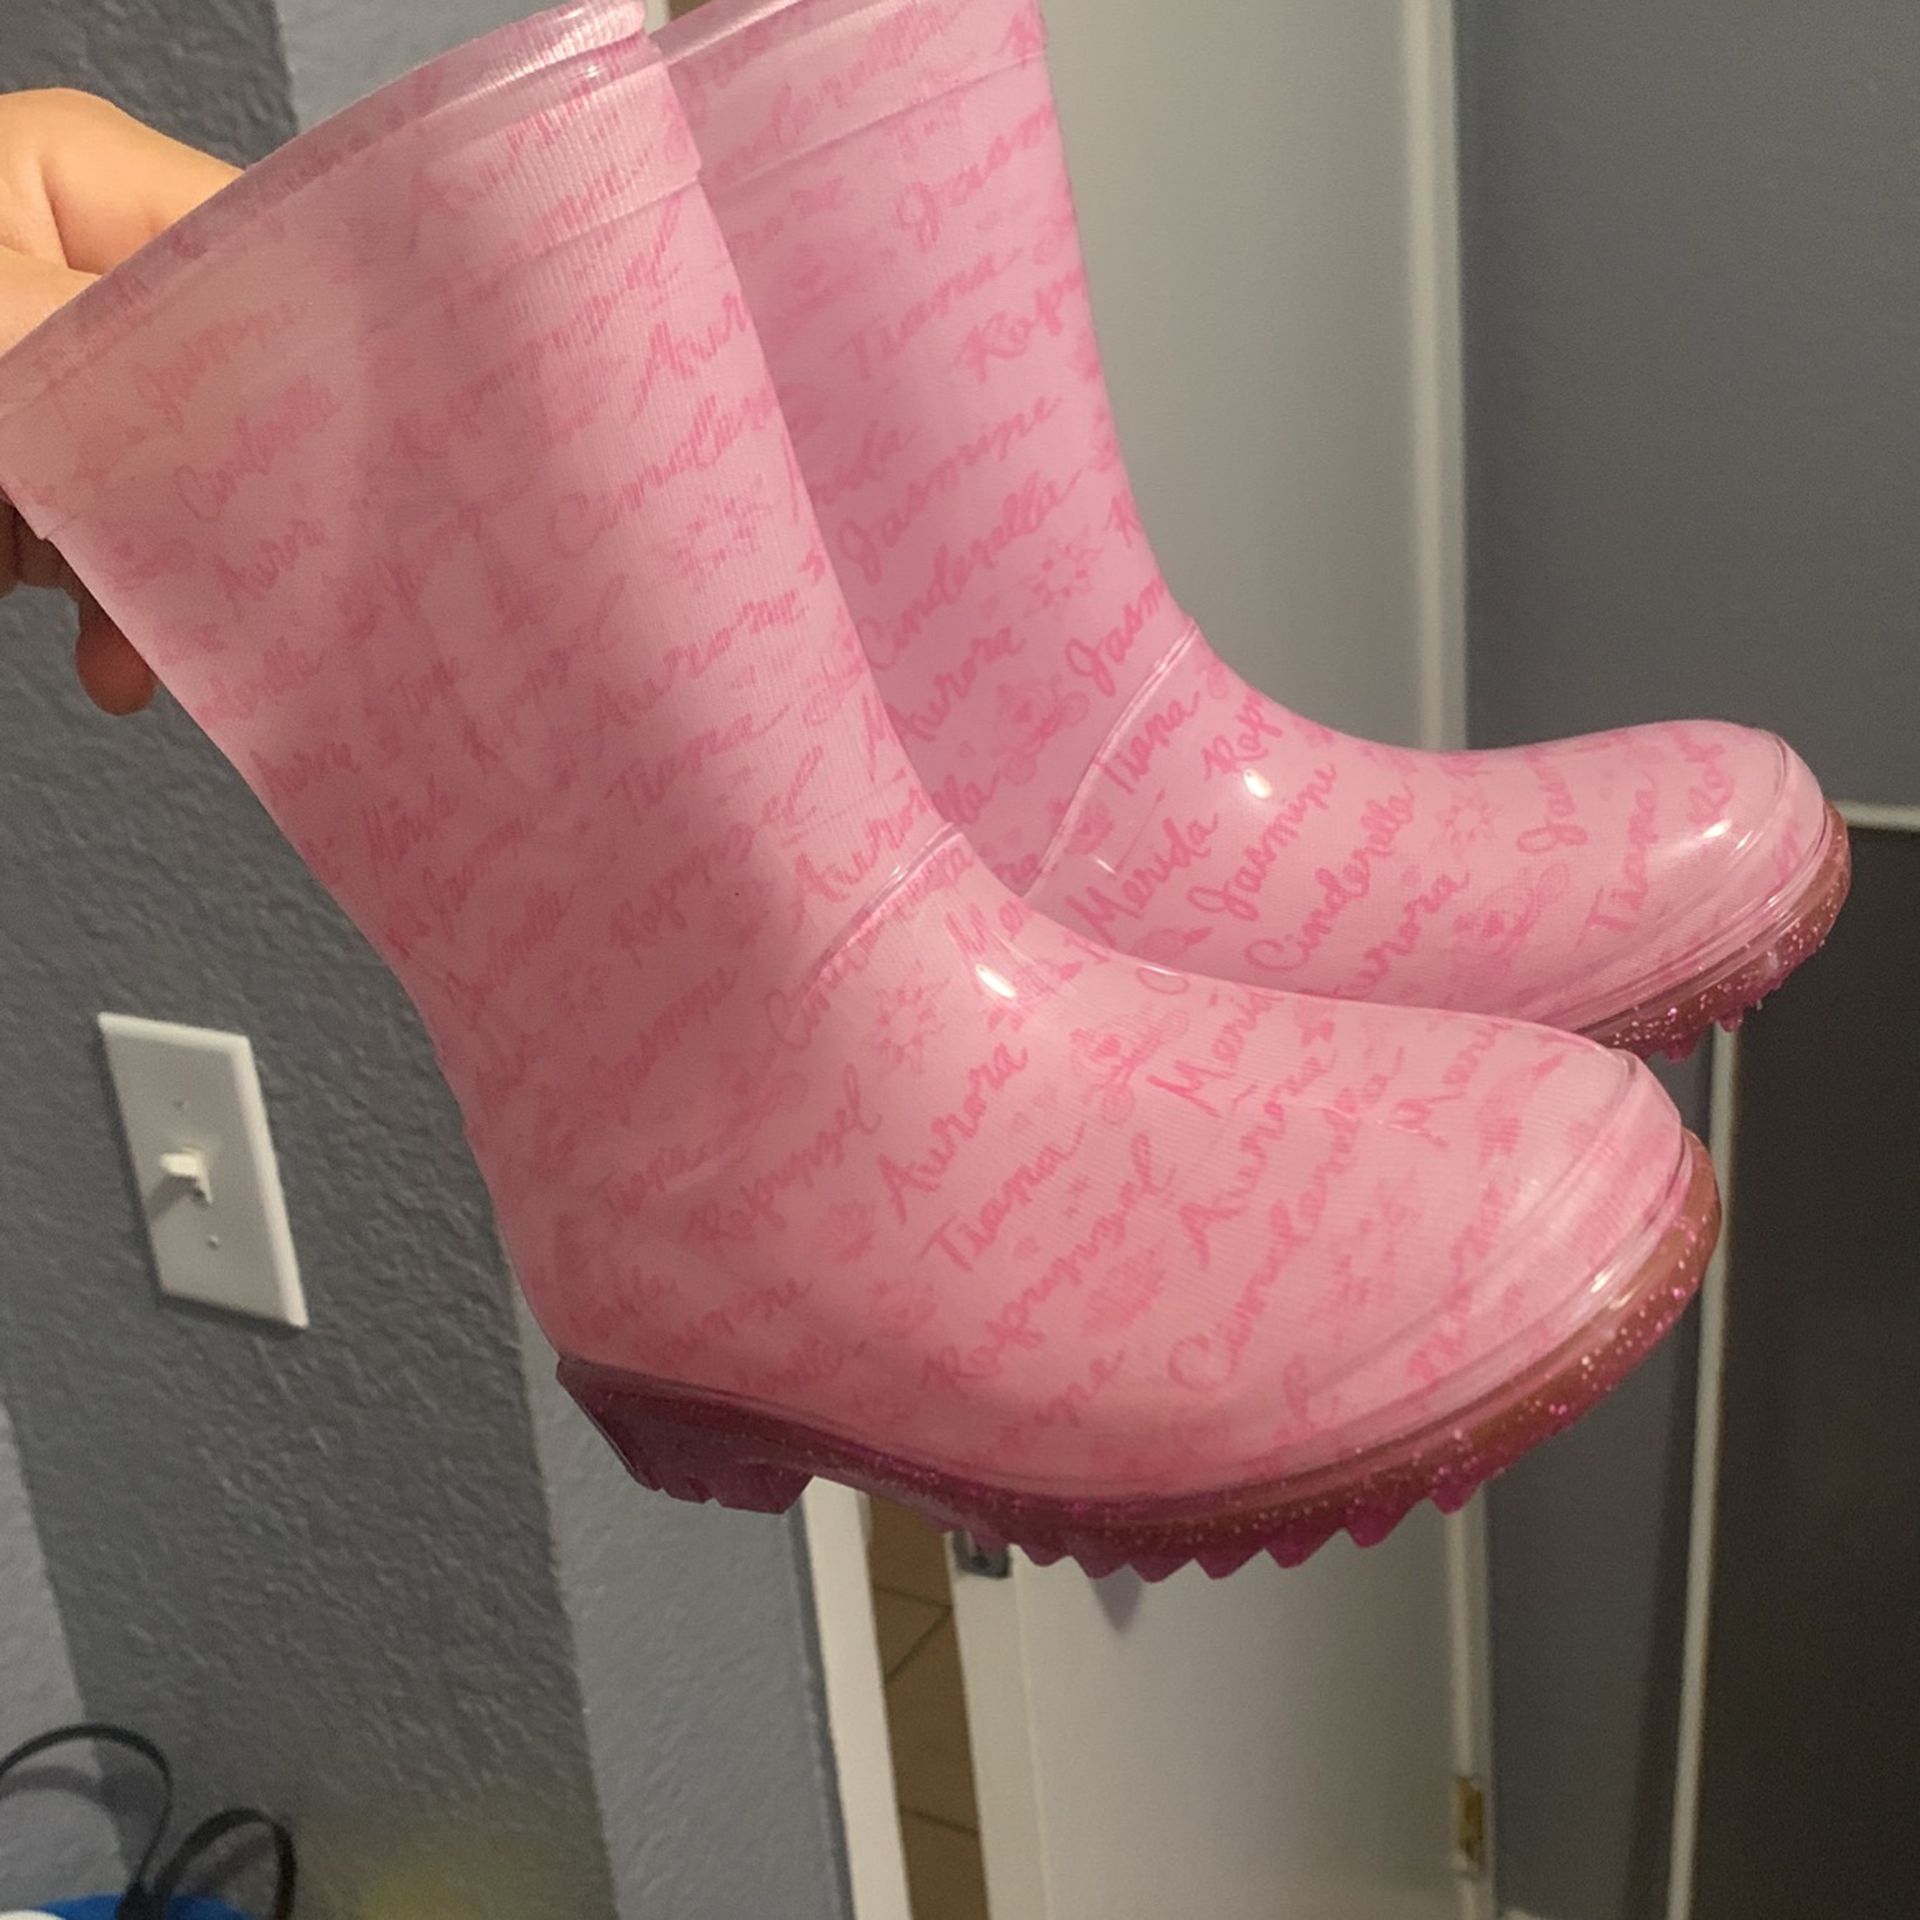 Disney Princess Girls Rain Boots Size 10